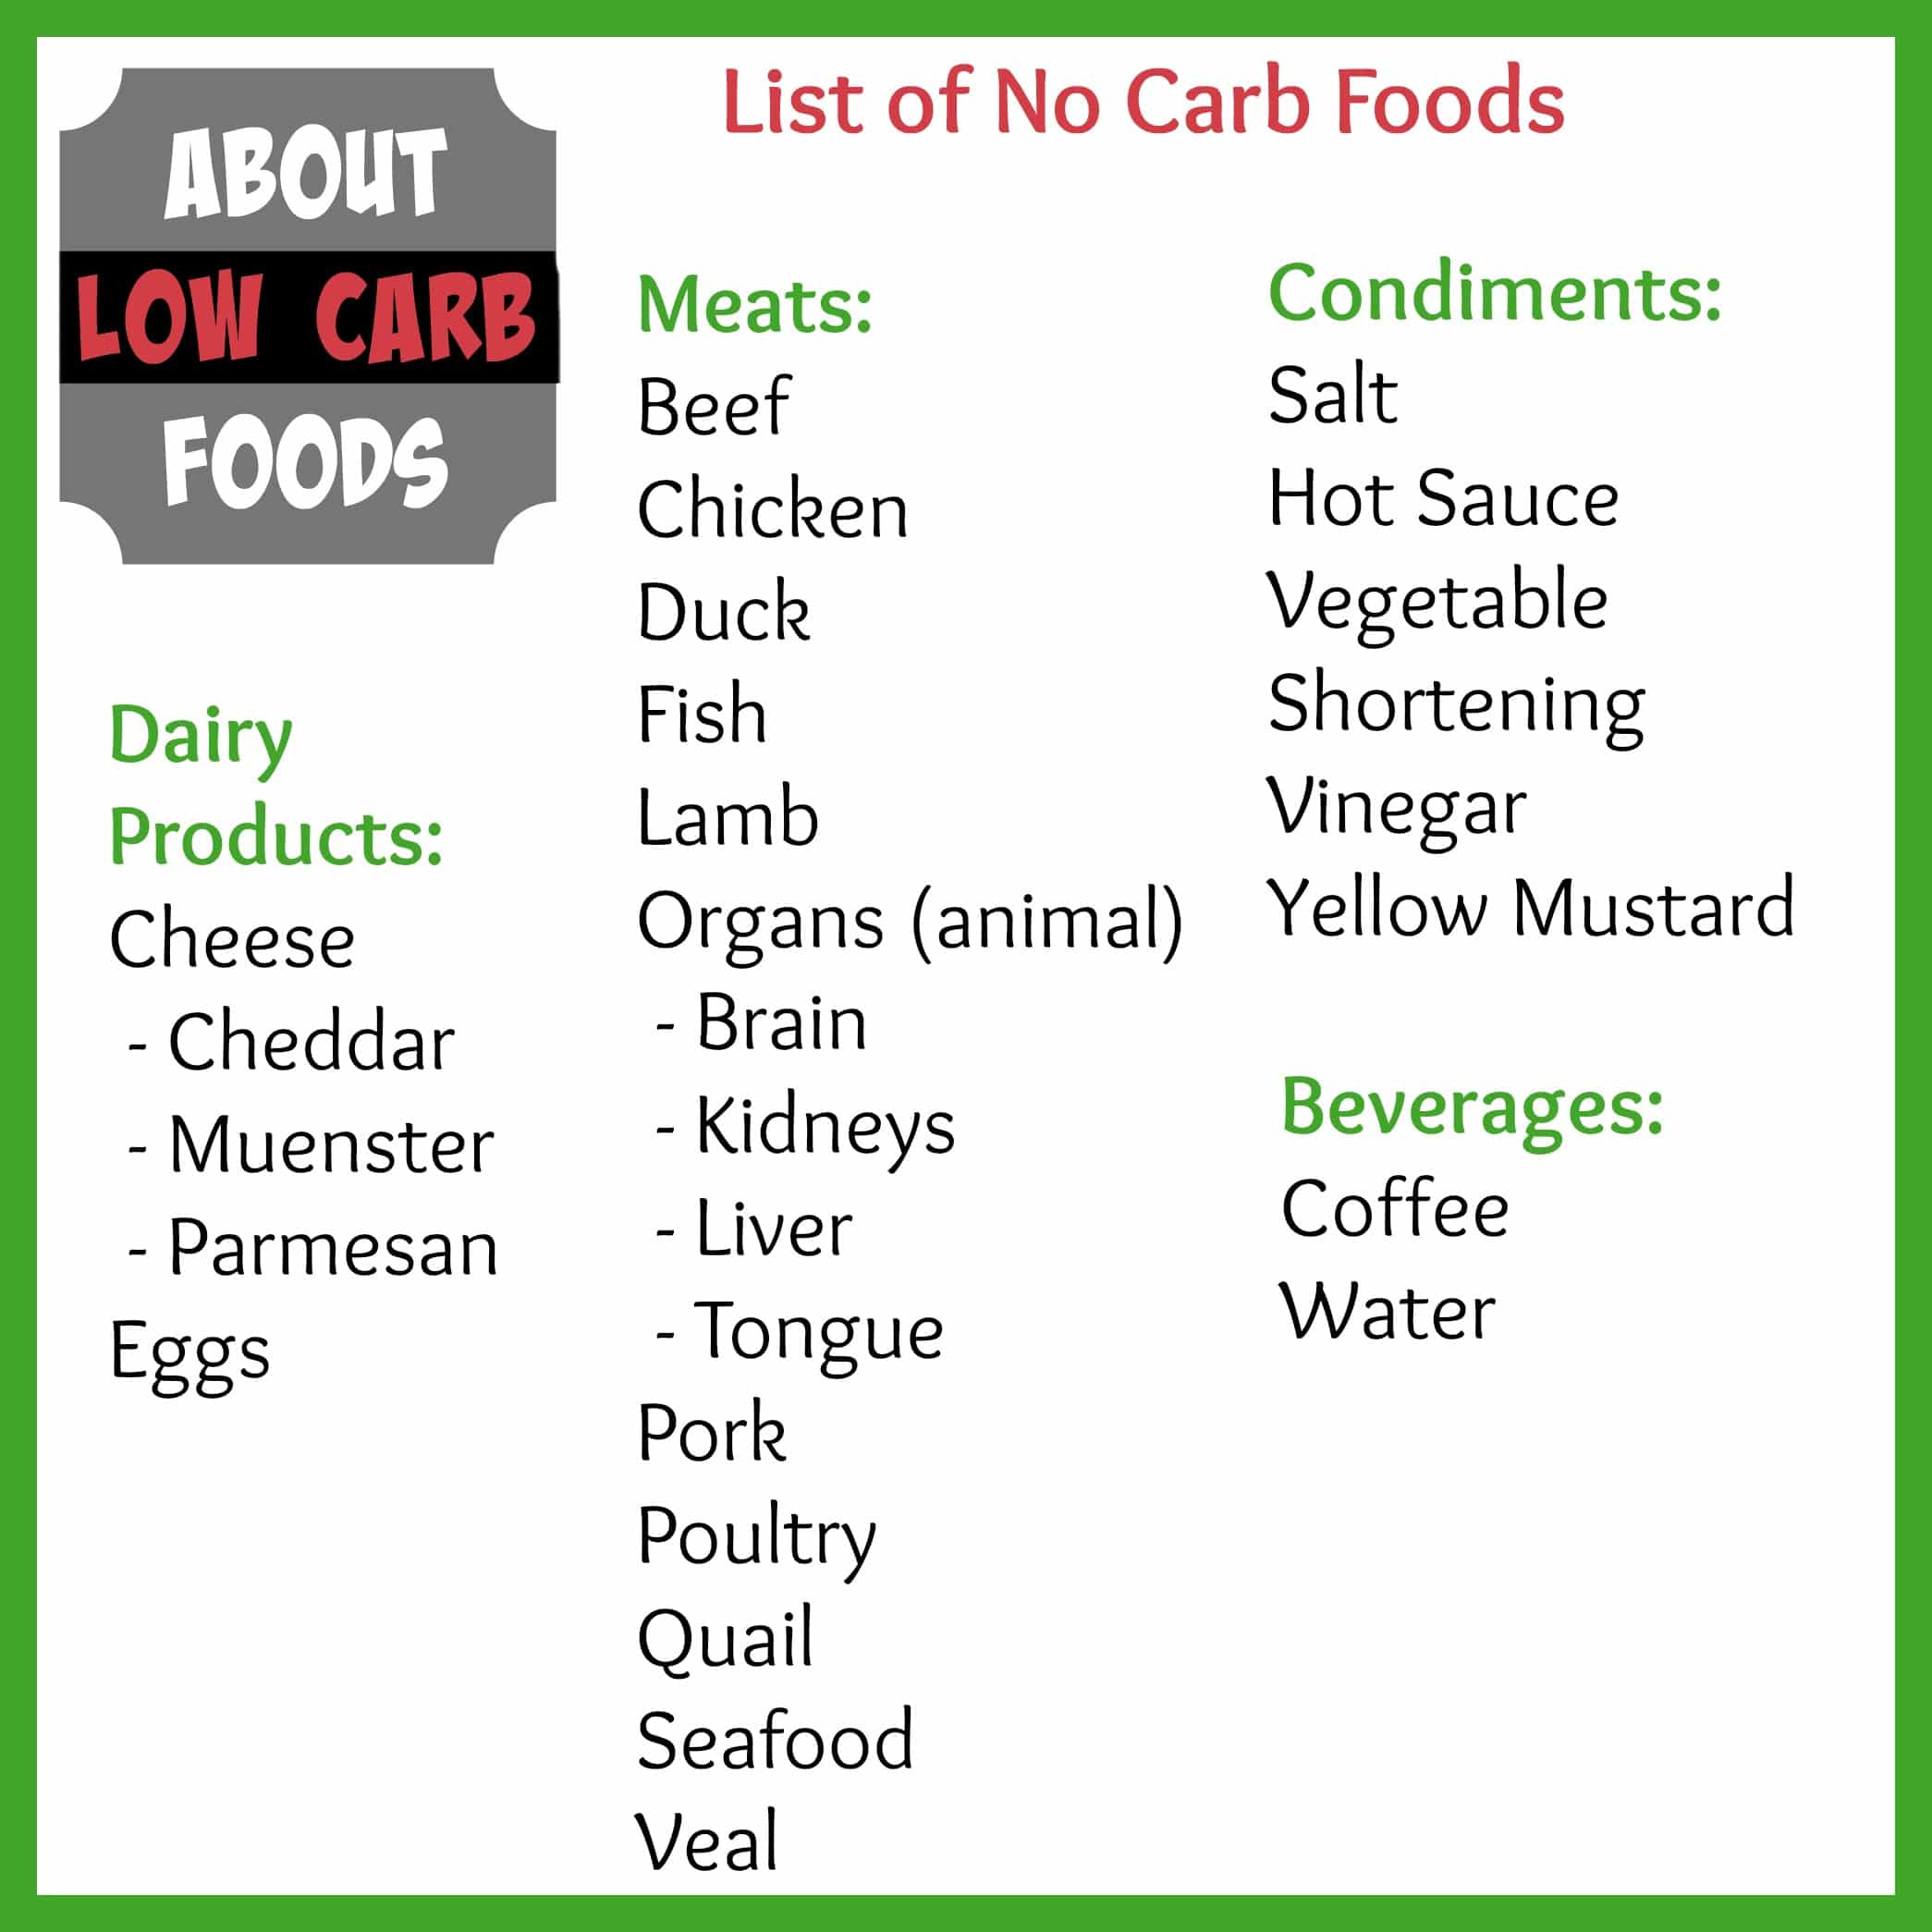 List of No Carb Foods